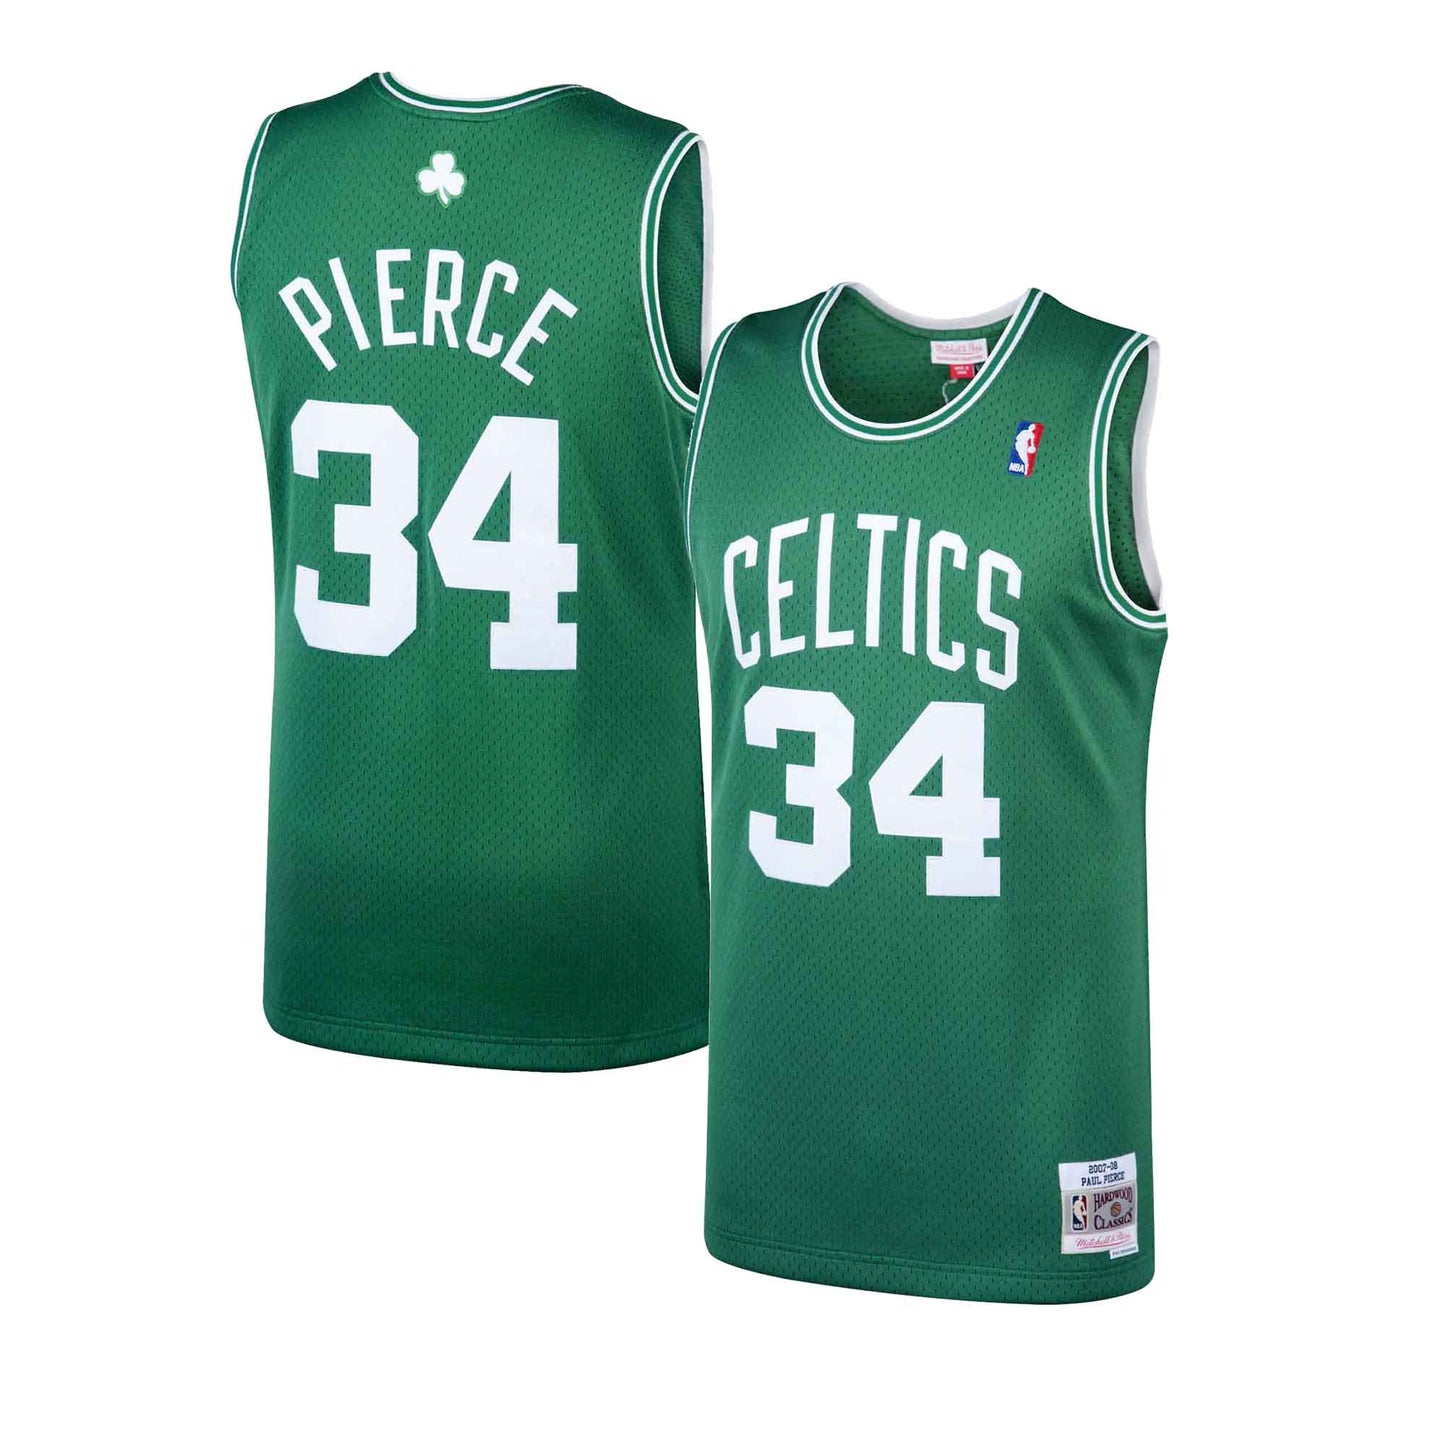 Adidas Vintage Adidas Boston Celtics #34 Paul Pierce NBA Jersey